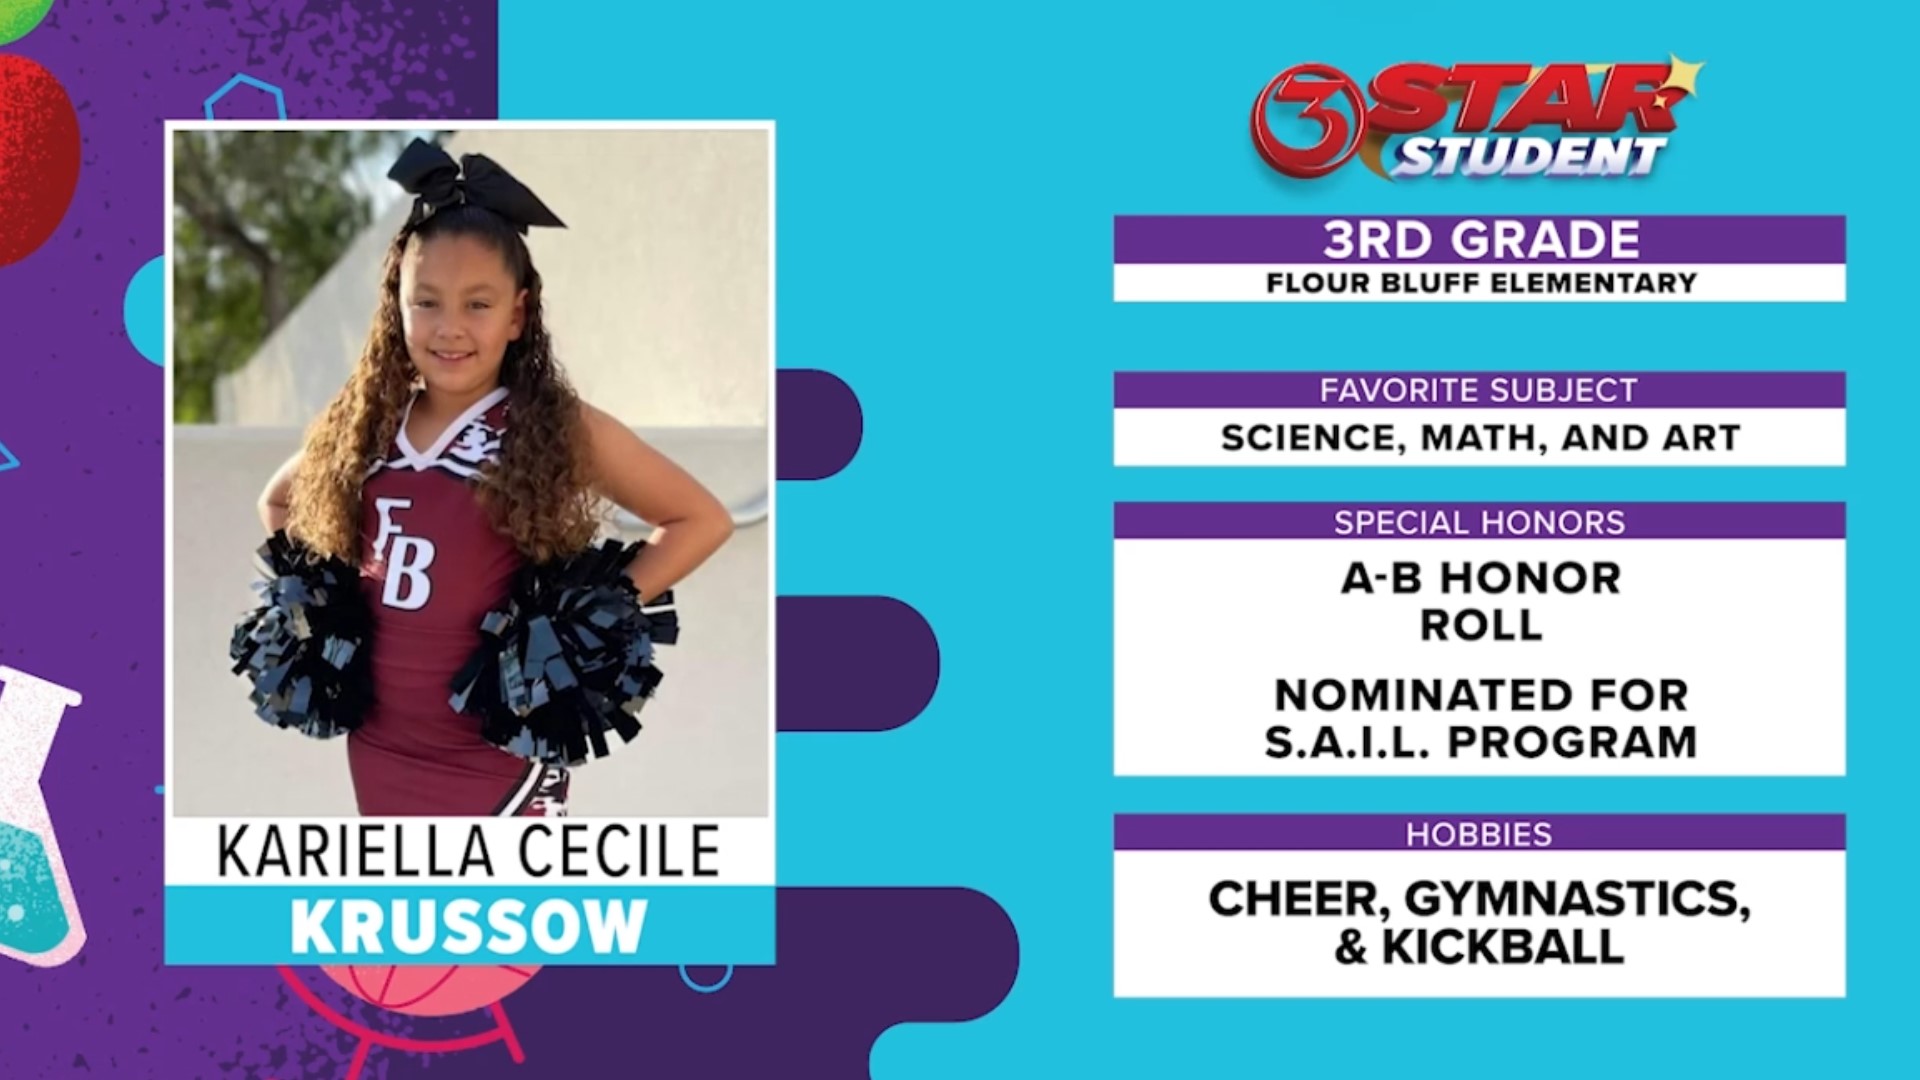 Kariella's hobbies include cheer, gymnastics and kickball!